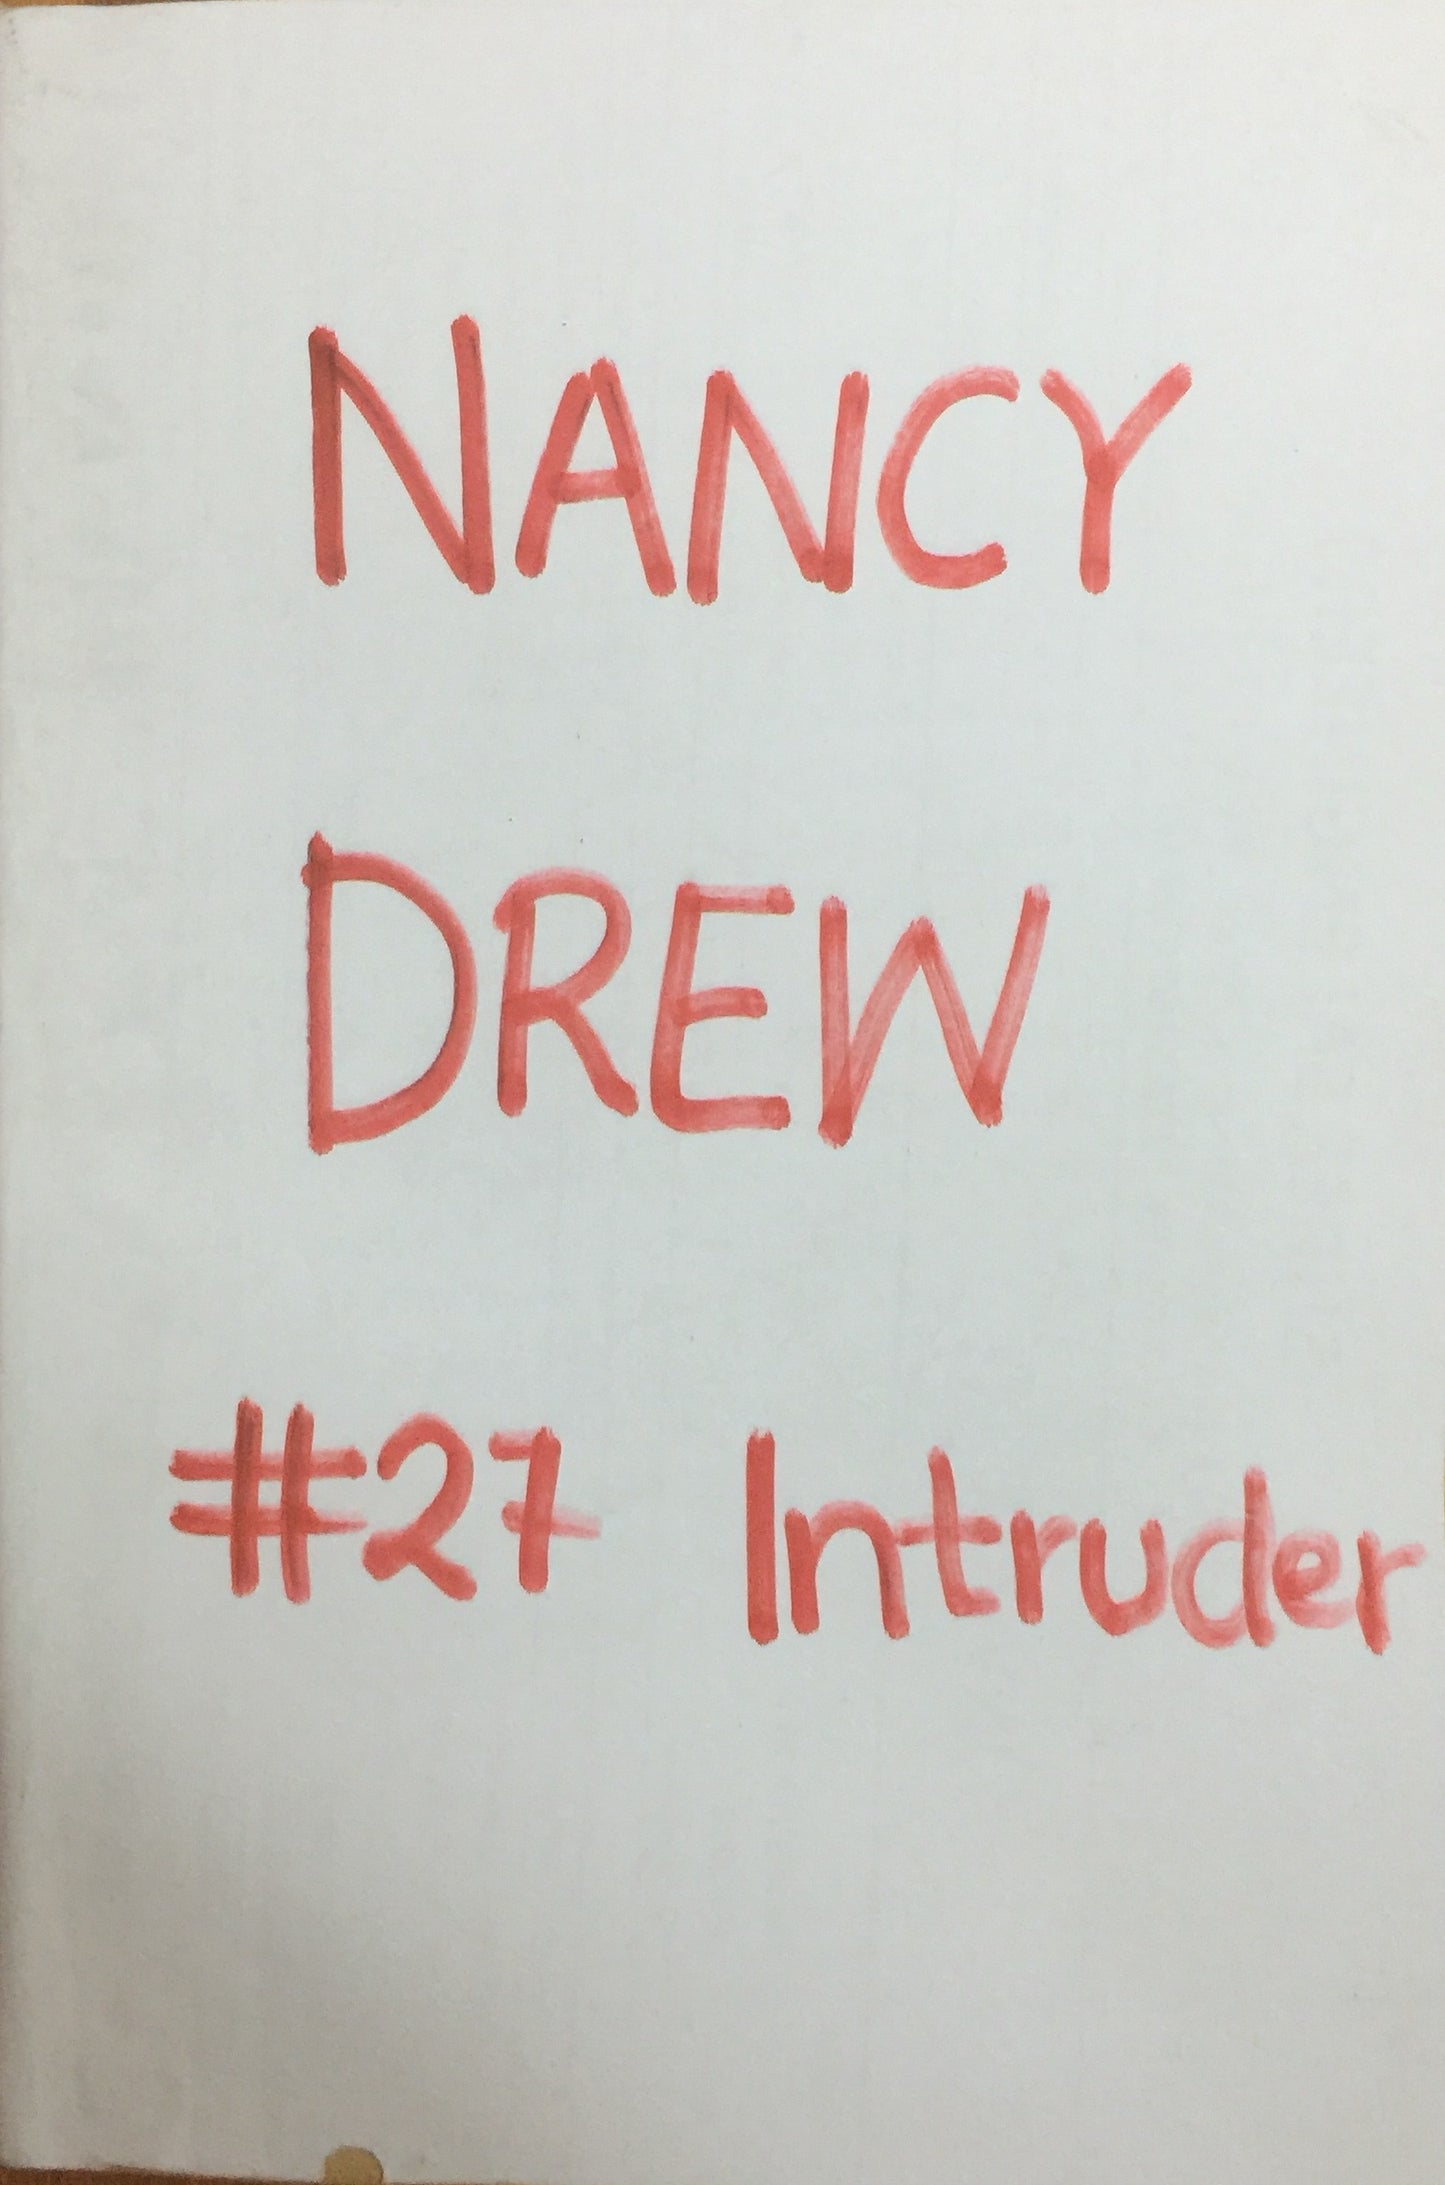 Nancy Drew - Intruder # 27 by Carolyn Keene (No Cover)